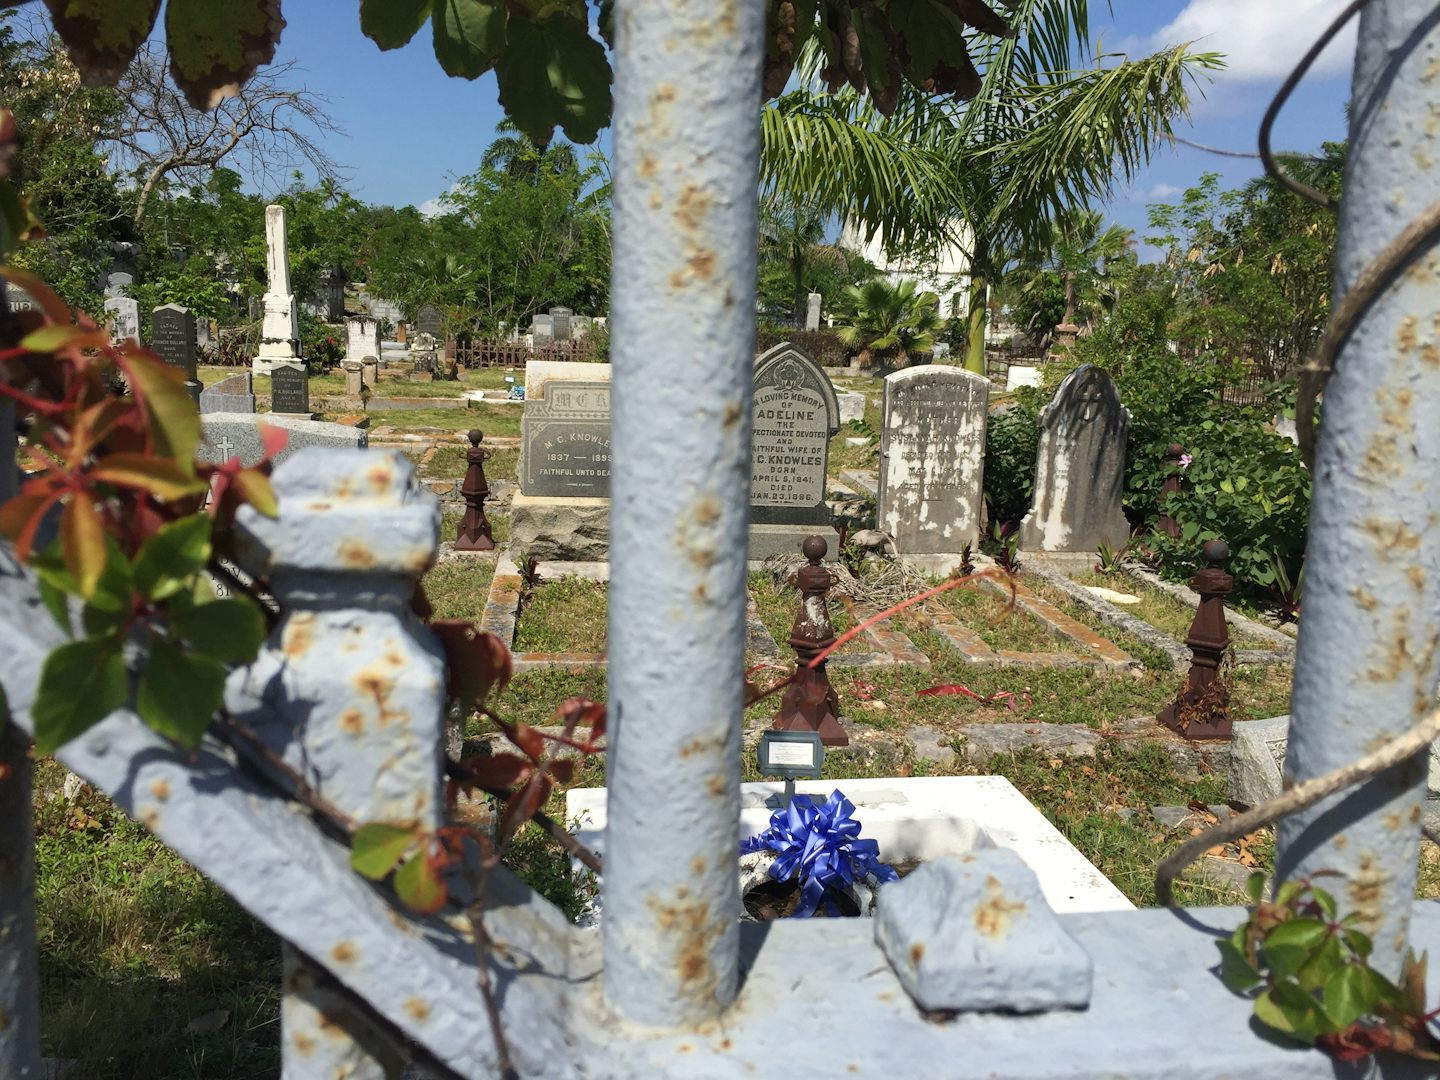 A cemetery in Nassau, Bahamas